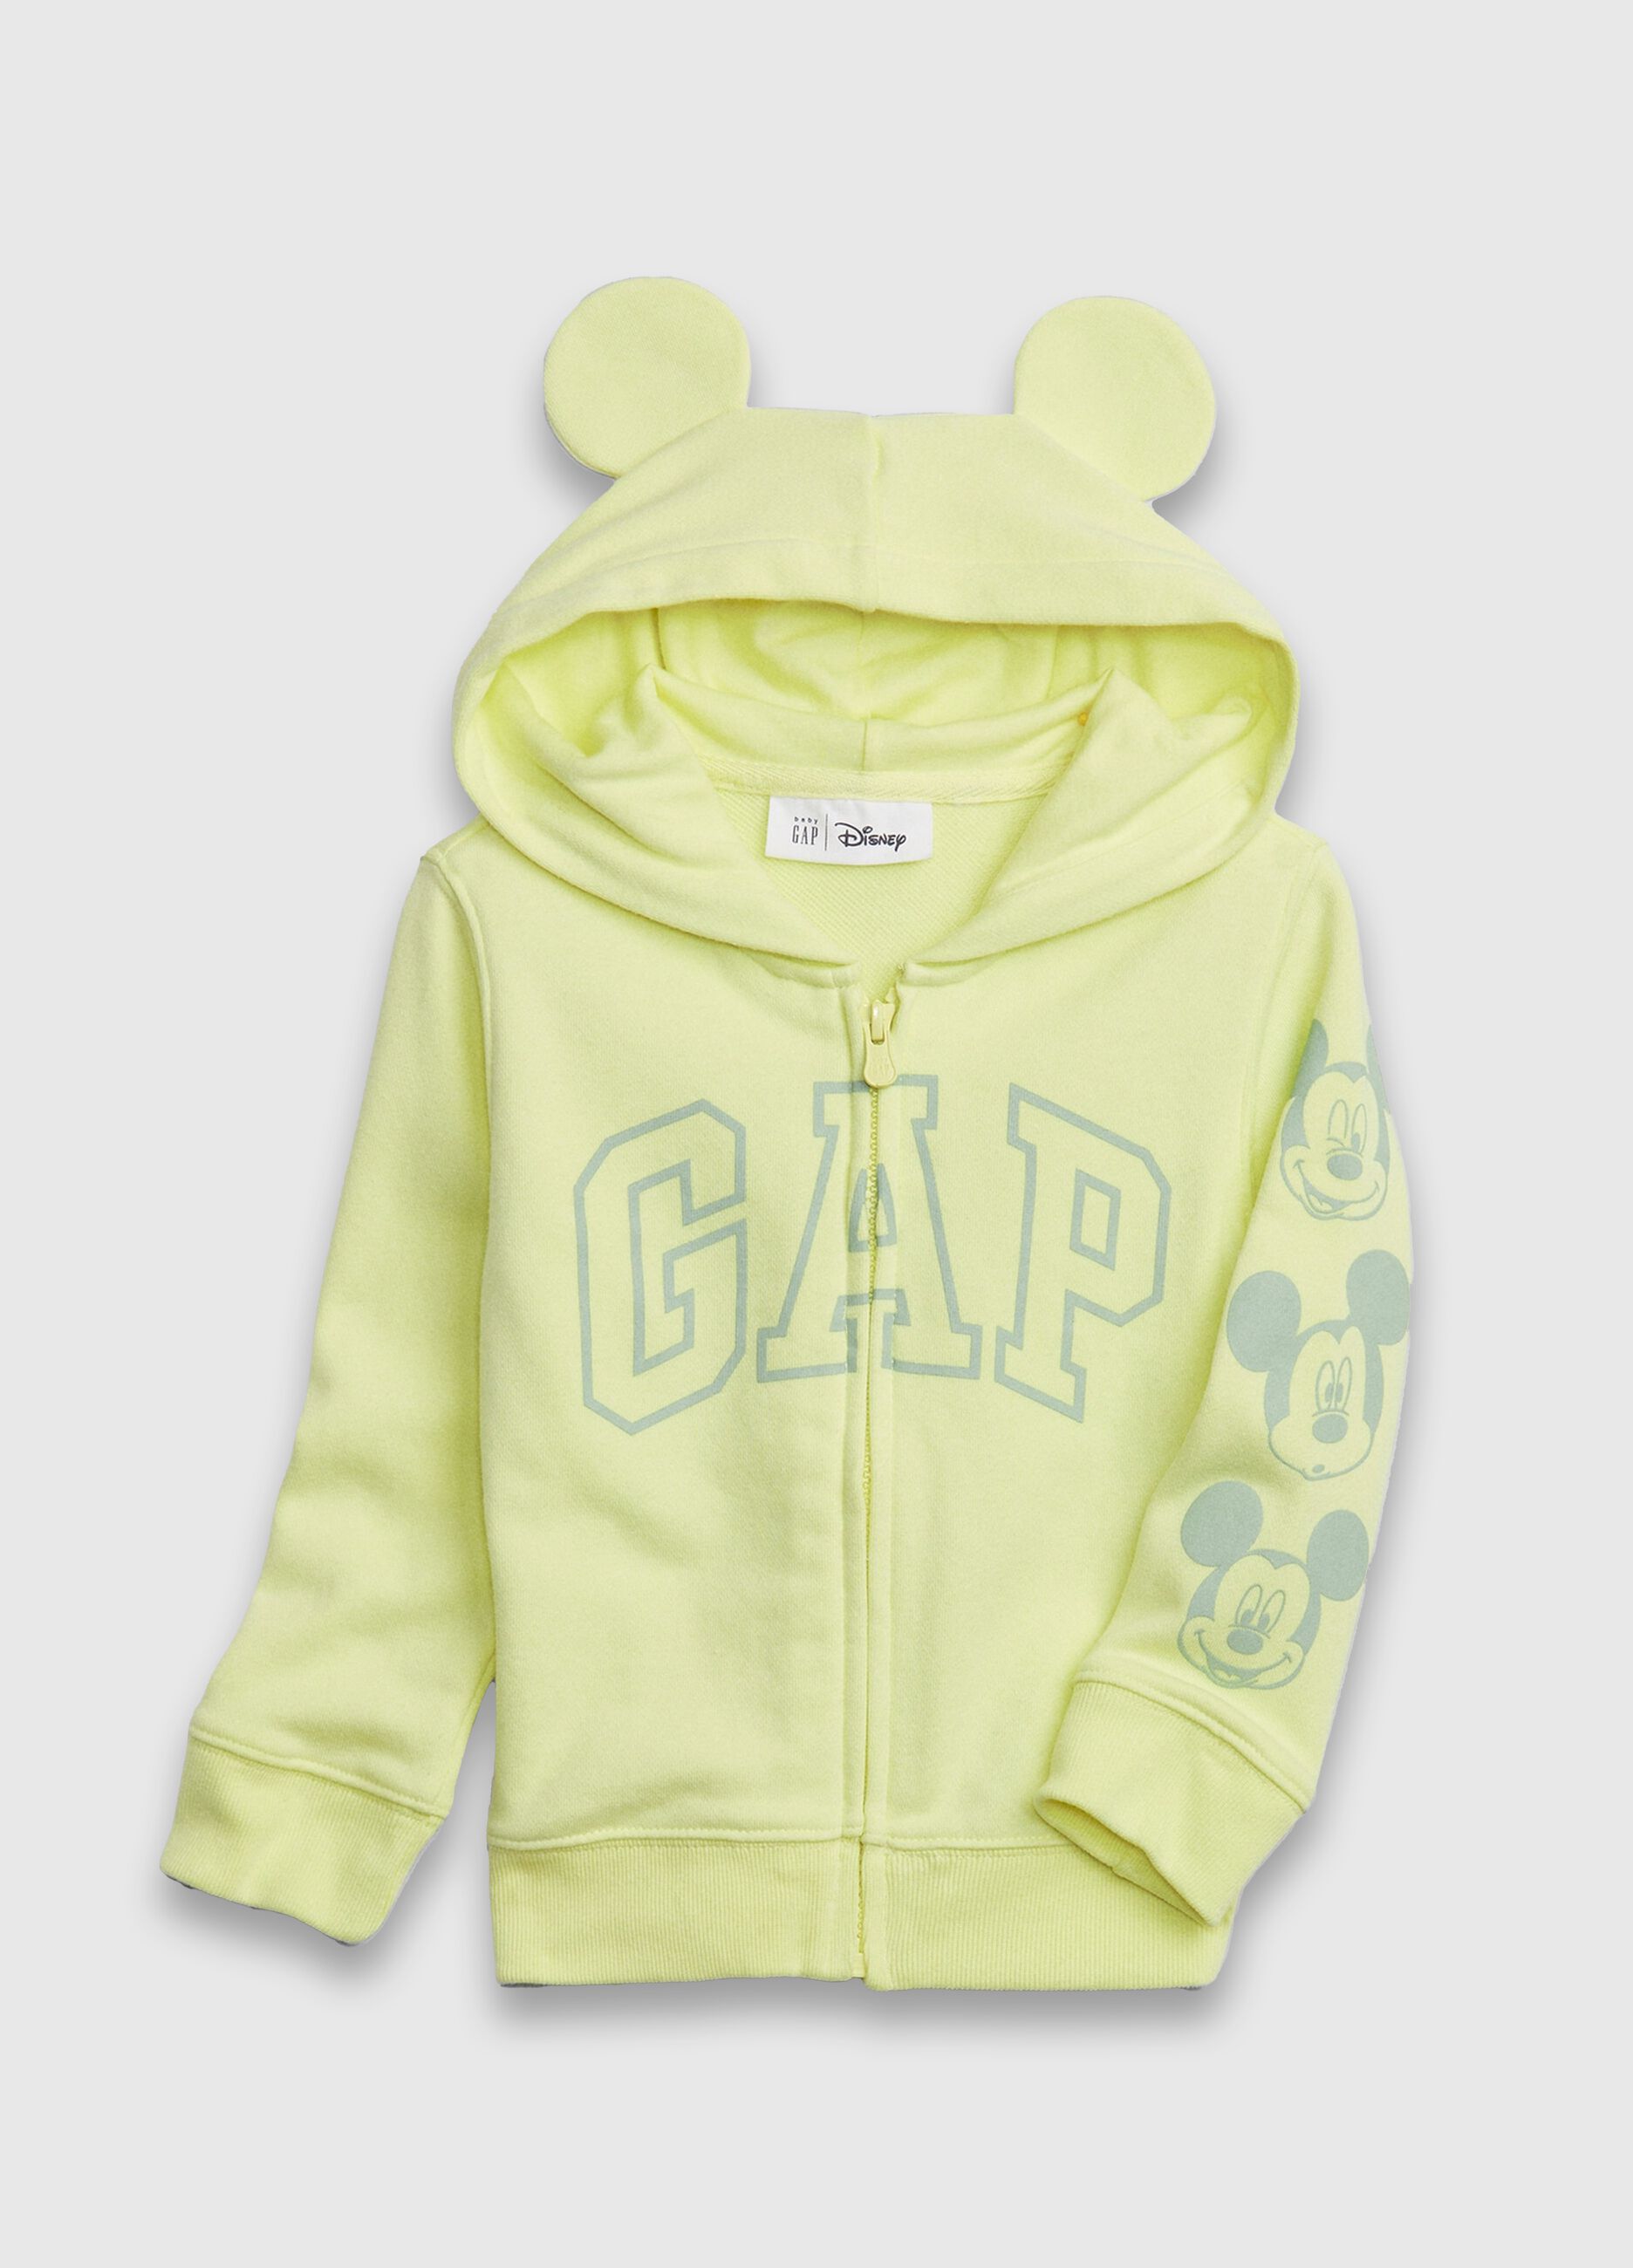 Full-zip sweatshirt with hood and logo and Disney print